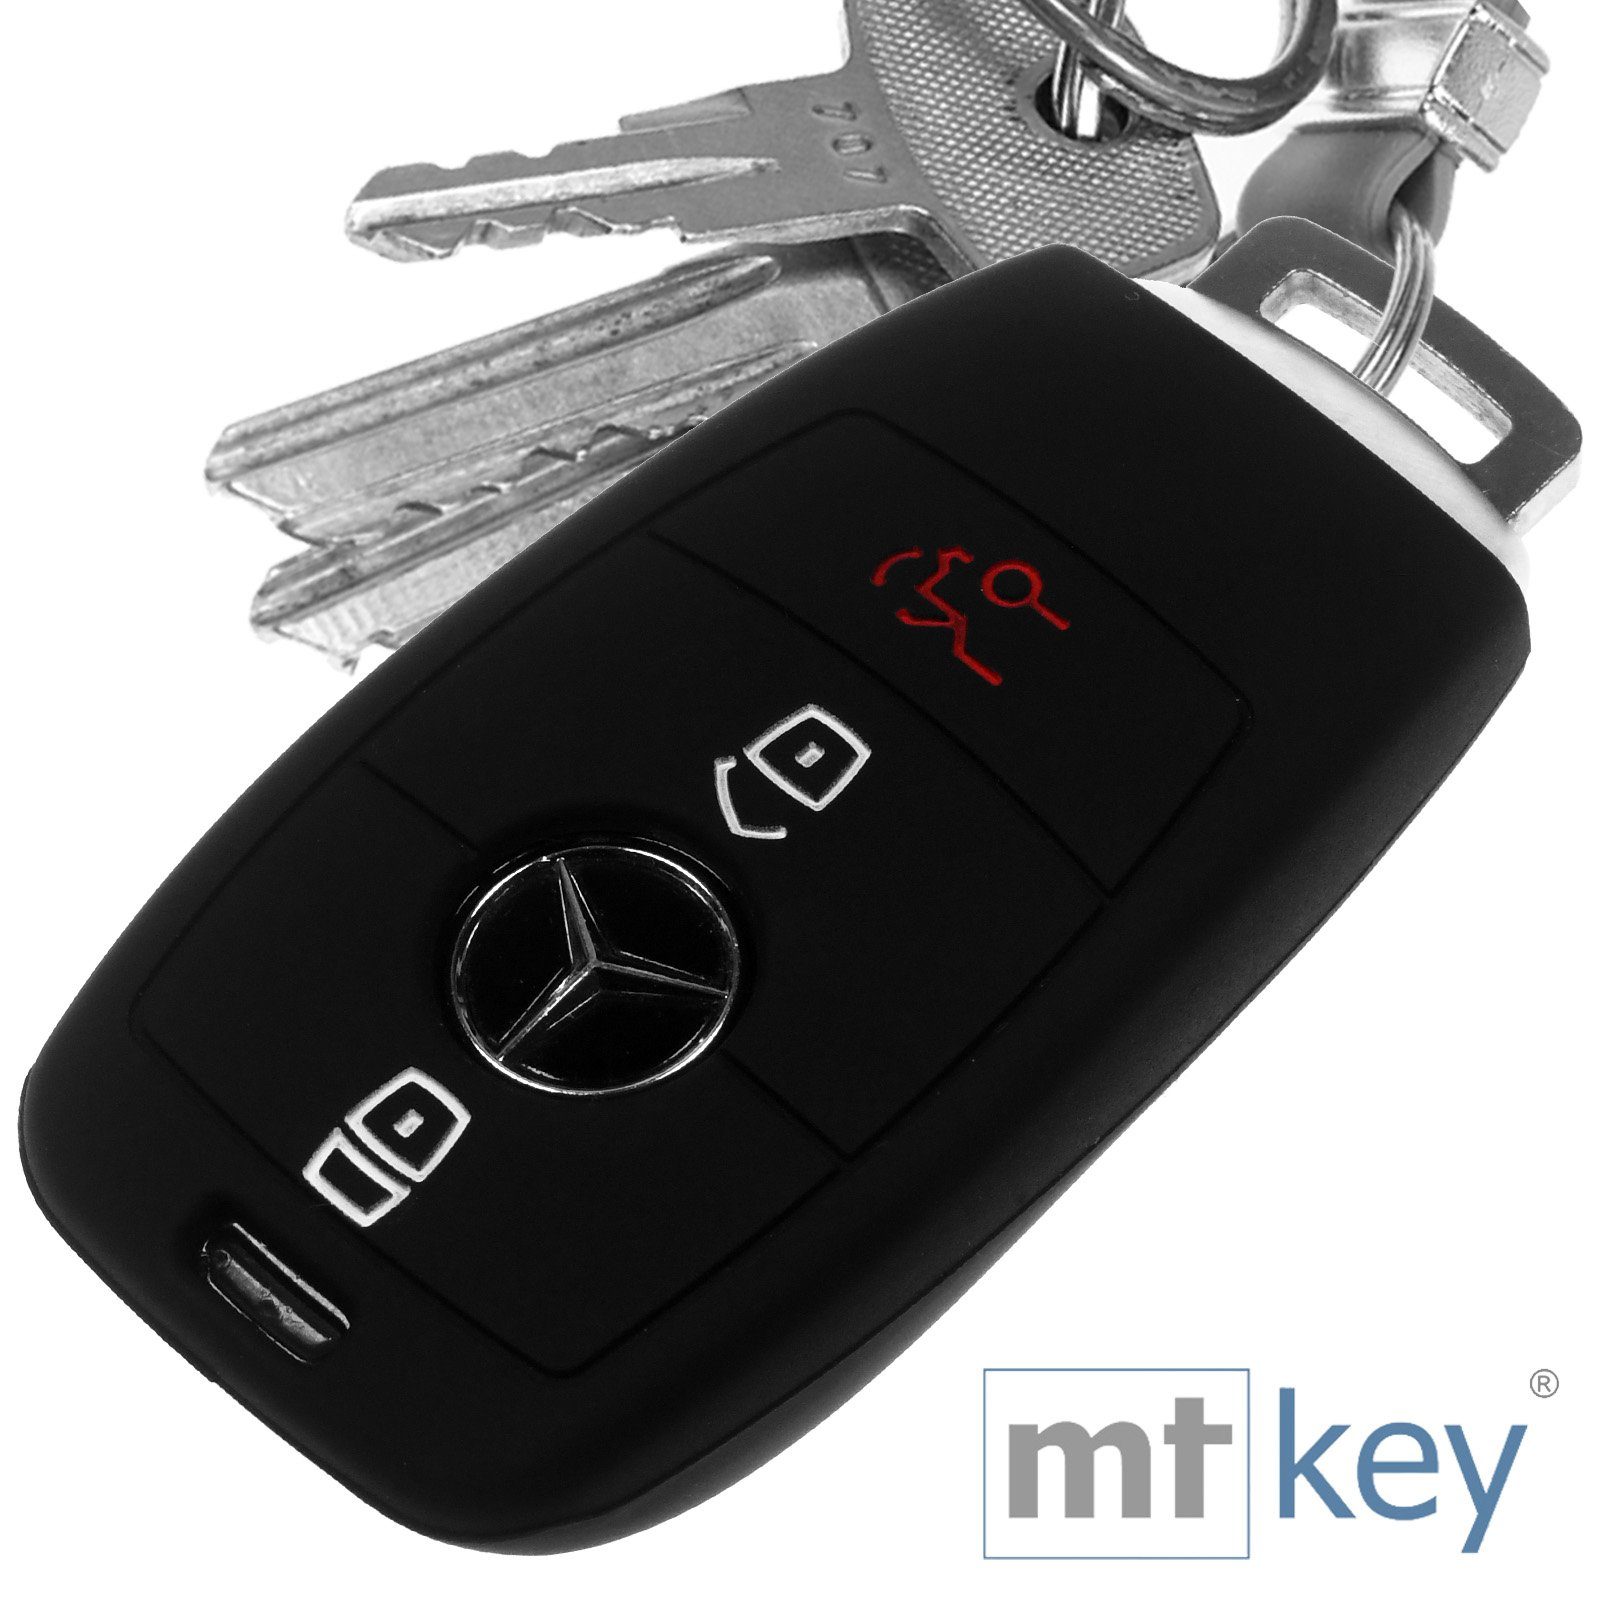 mt-key Schlüsseltasche Autoschlüssel Softcase Silikon Schutzhülle Grün, für  BMW F20 F13 F30 F31 F32 F33 F22 1er 2er 3er 4er 3 Tasten KEYLESS